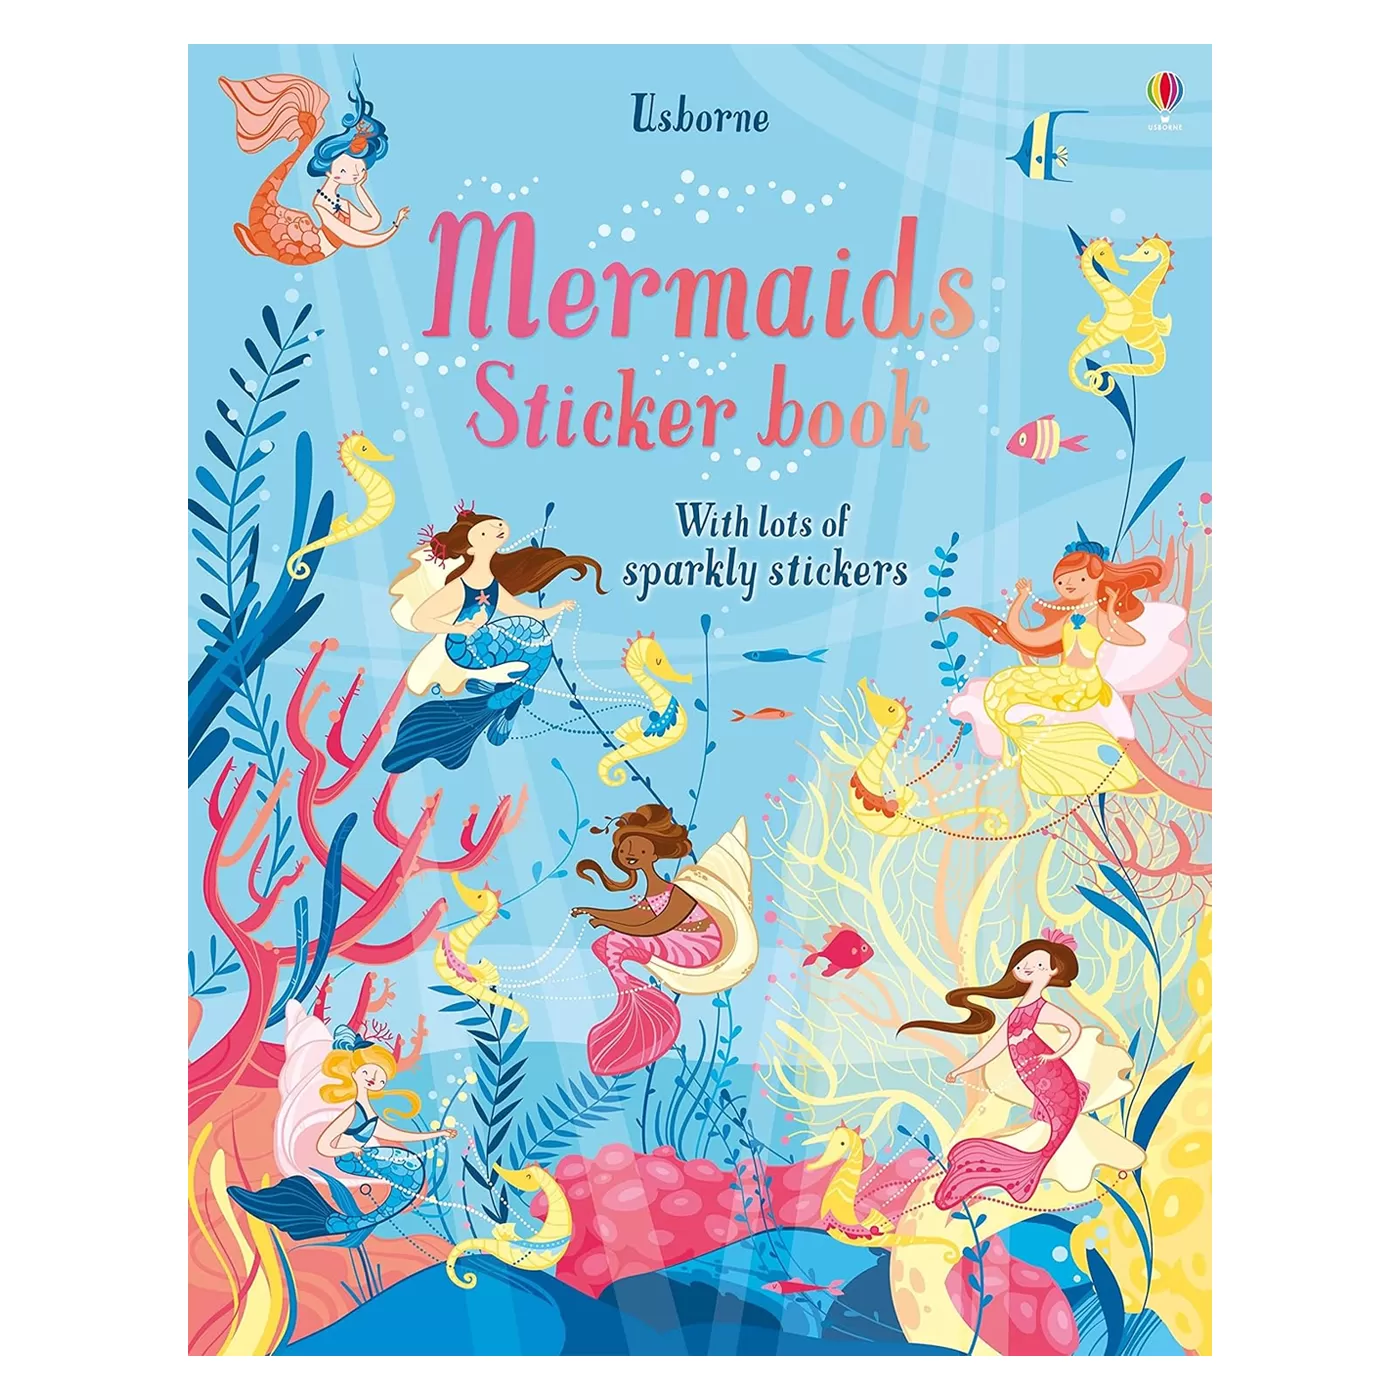 USBORNE Mermaids Sticker Book